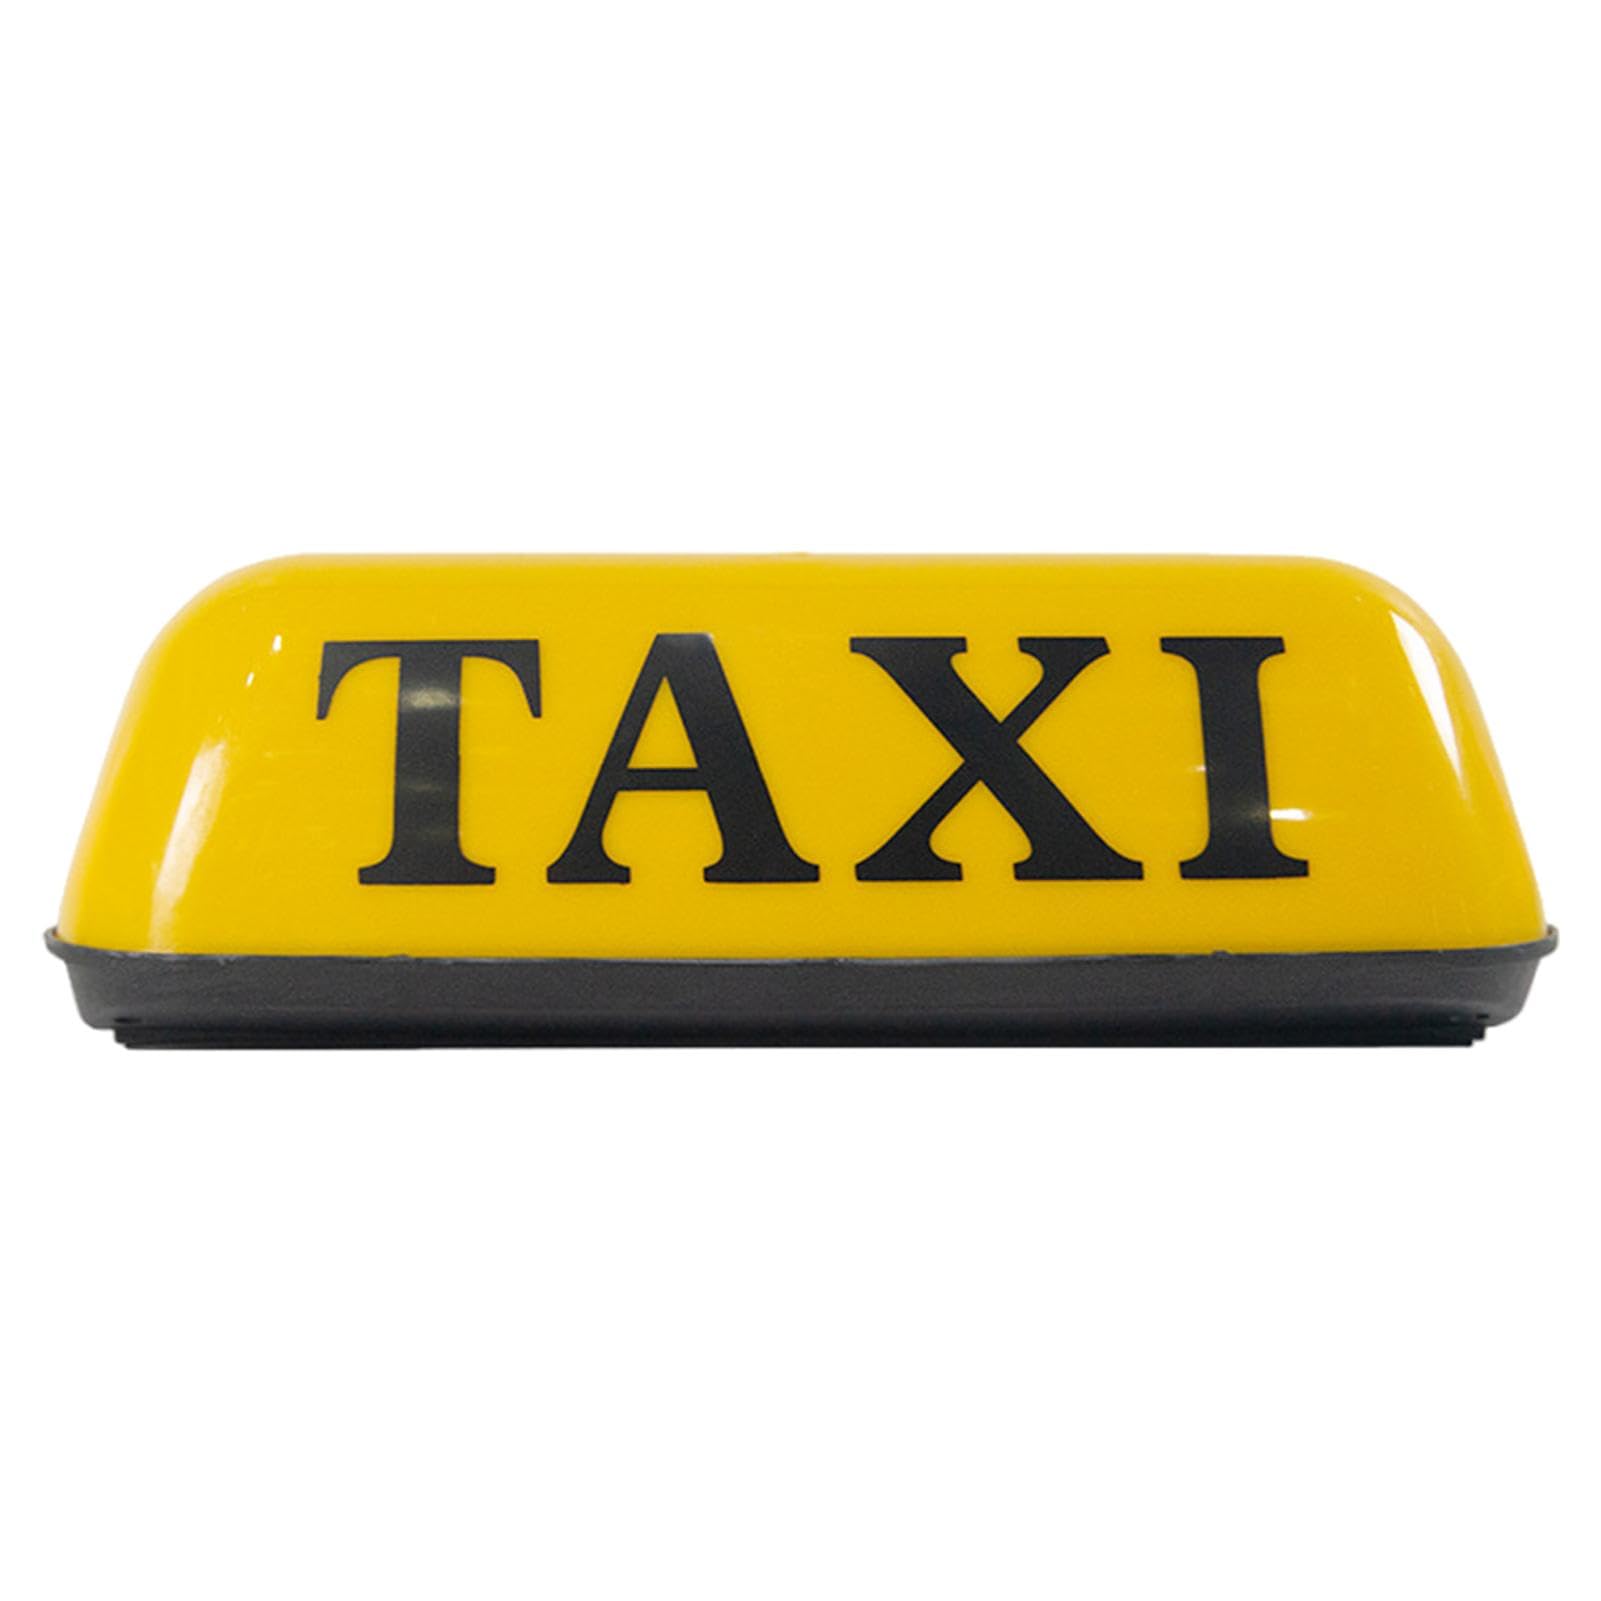 Ysvnlmjy Taxi-Licht für Auto, Taxi-Leuchtschild, Taxi-Leucht-Dachlampe, Retro-Taxi-Dachschild, Taxi-Dachleuchte, Taxi-Schilder-Licht für 12 V Auto von Ysvnlmjy